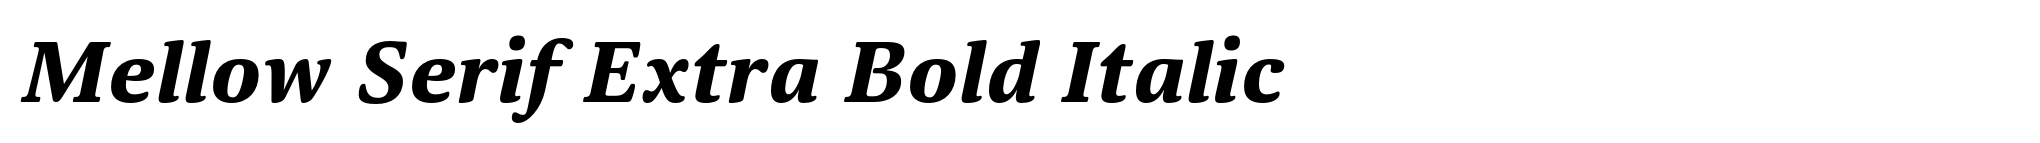 Mellow Serif Extra Bold Italic image